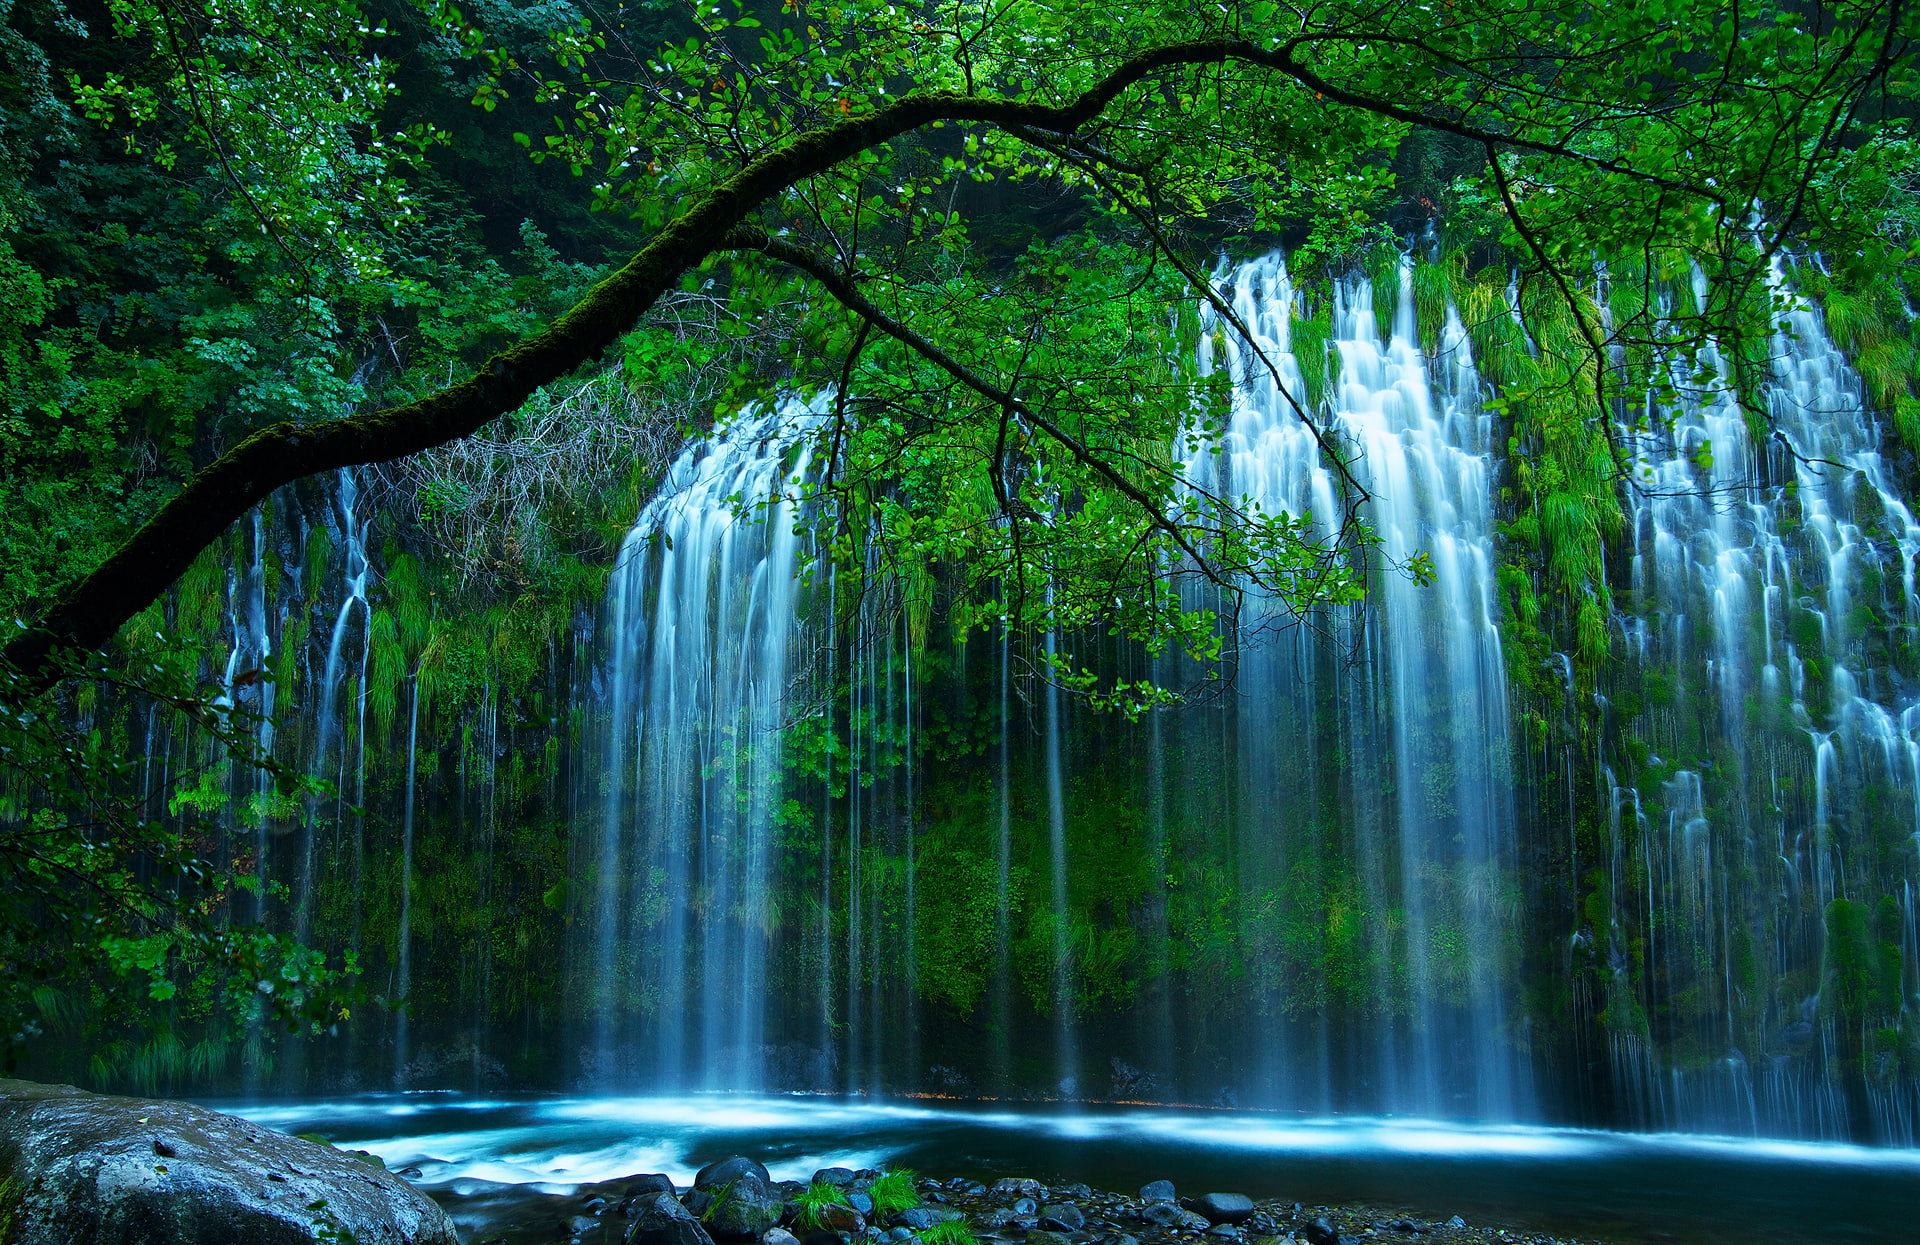 waterfalls near trees, greens, nature, USA, Shasta Retreat, Sacramento River